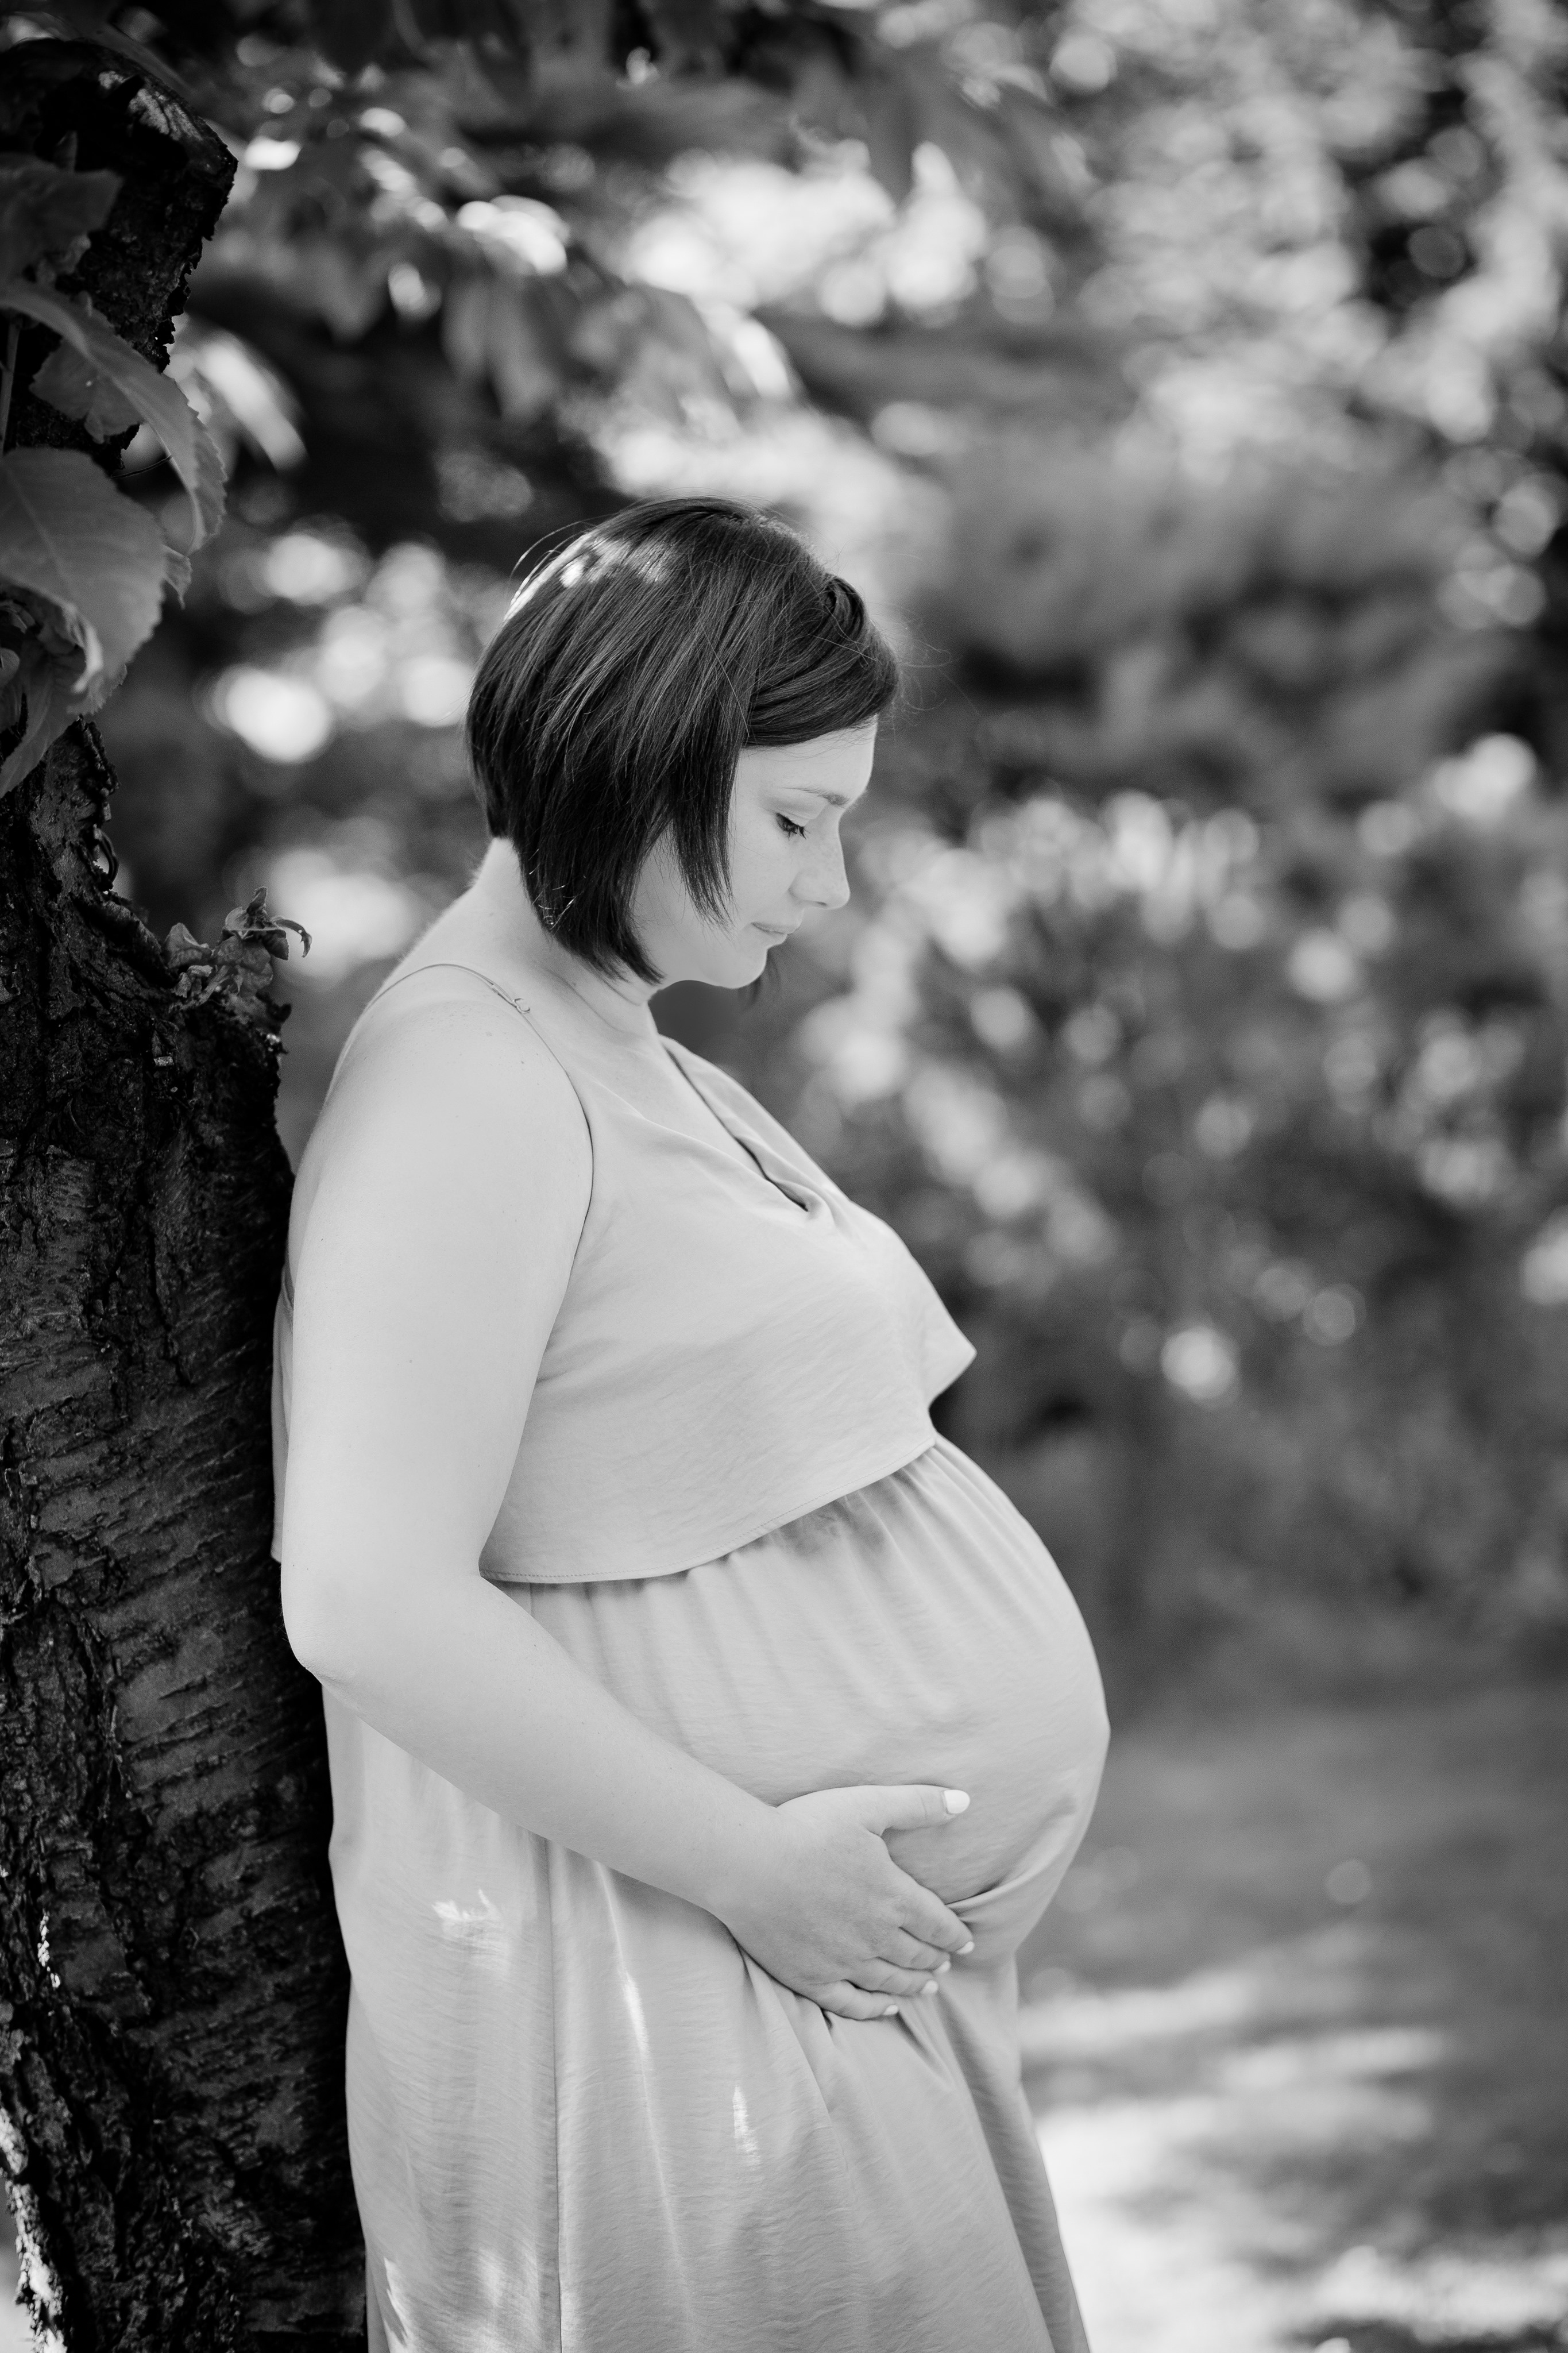 AMH 0,16 – Kasia i ciąża naturalna